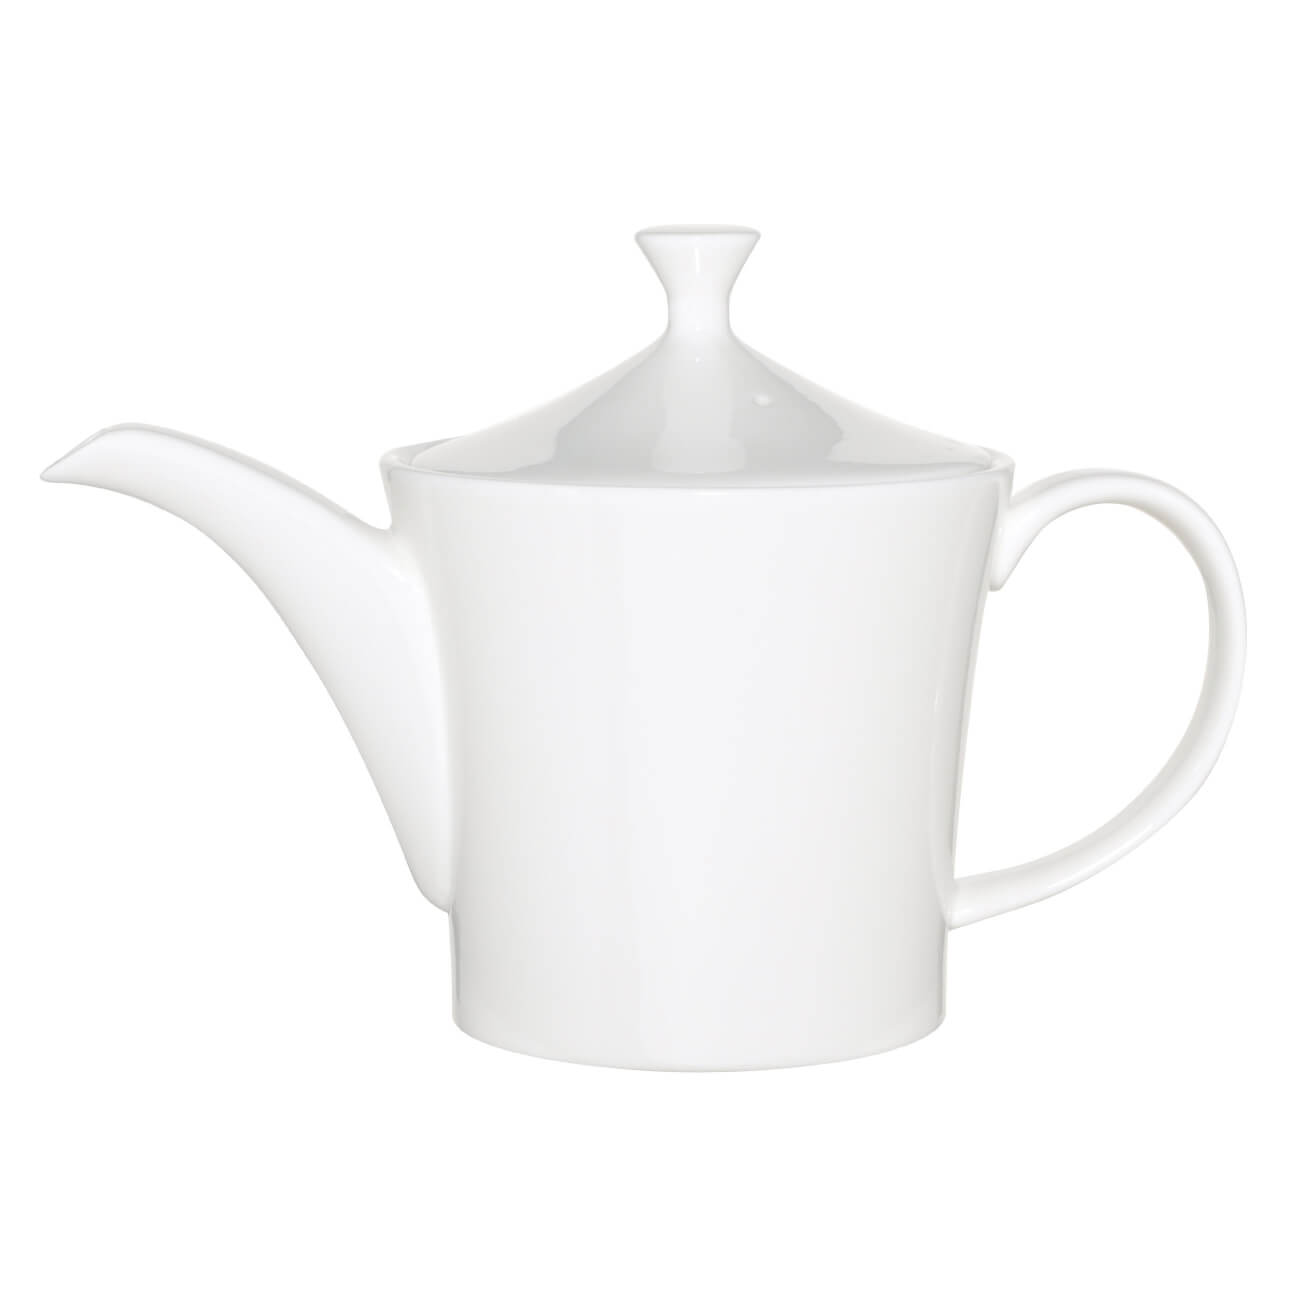 Чайник заварочный, 800 мл, фарфор F, белый, Ideal white чайник заварочный син 1 5